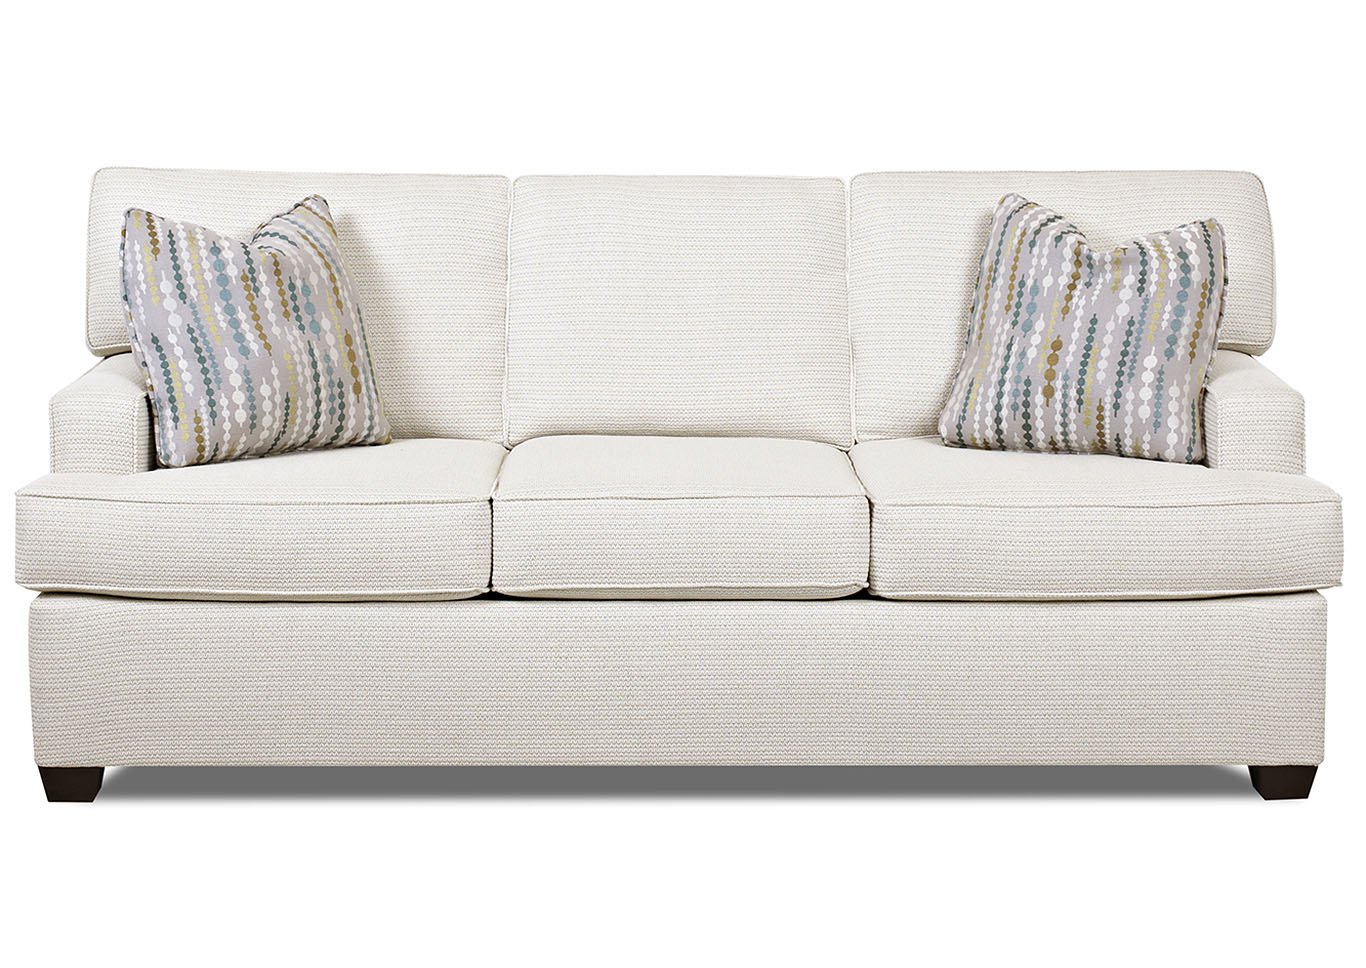 Cruze Ecru Stationary Fabric Sofa,Klaussner Home Furnishings